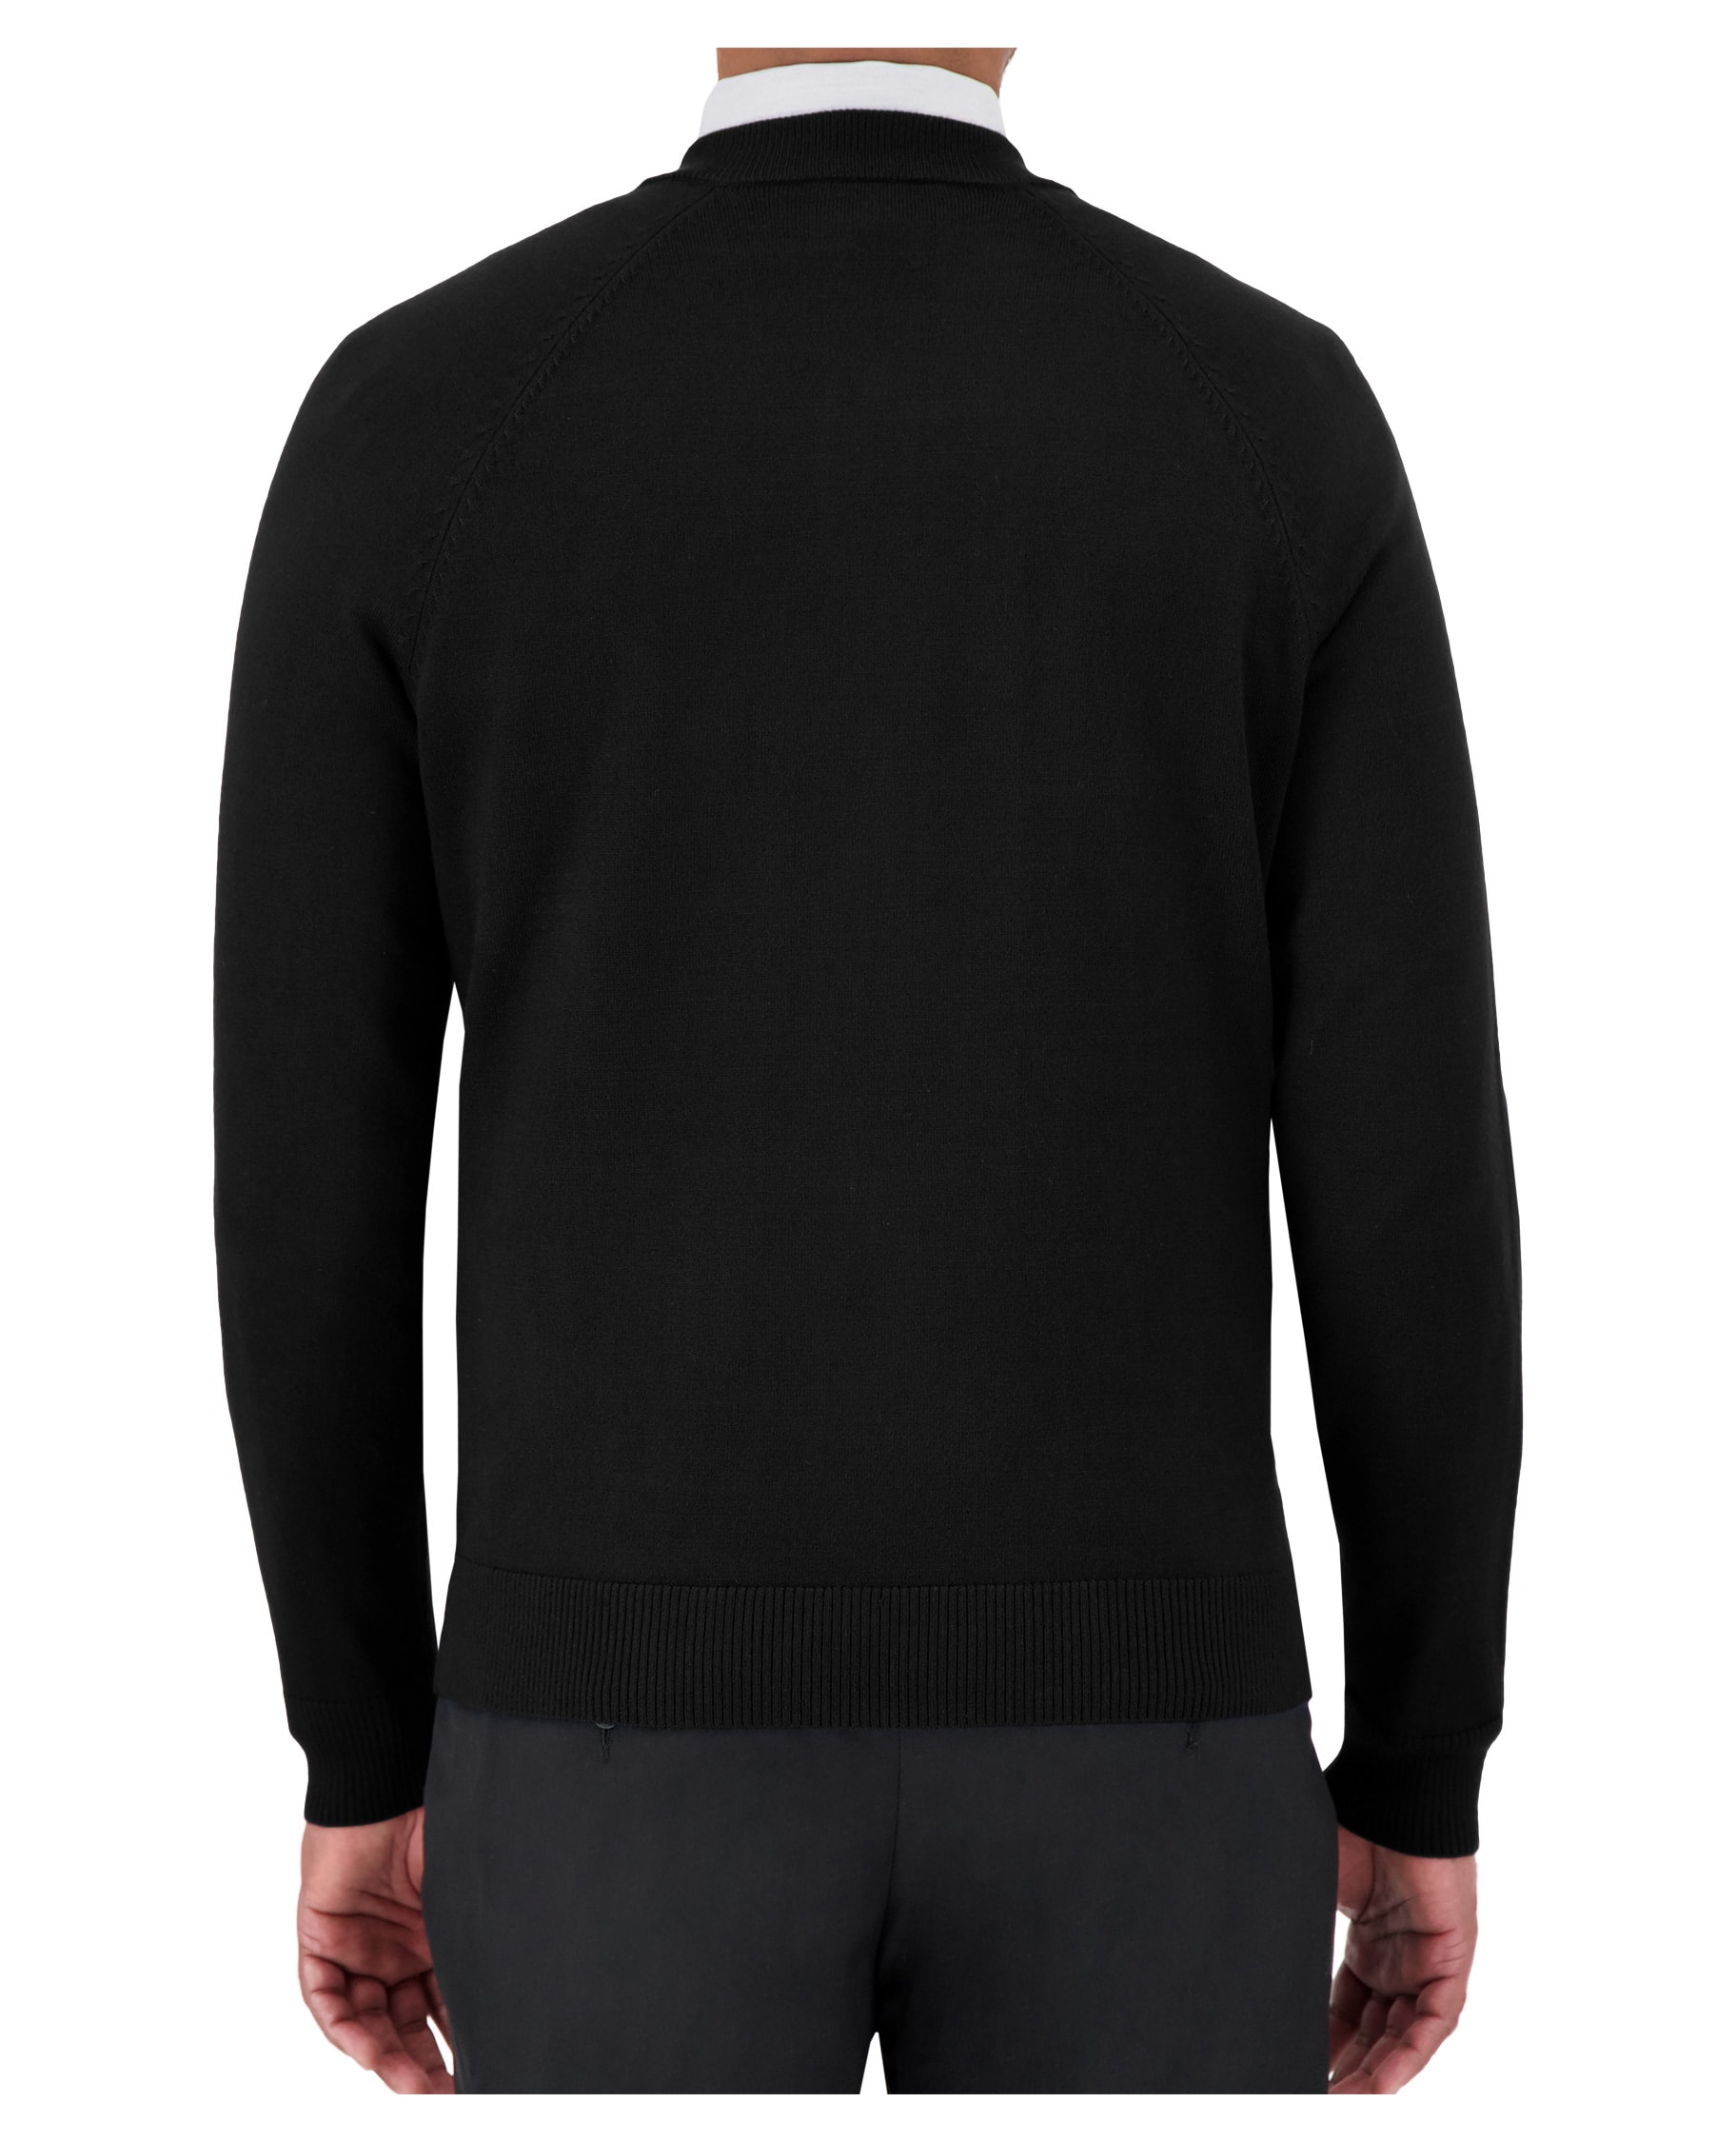 back of black crew neck zip up uniform sweater